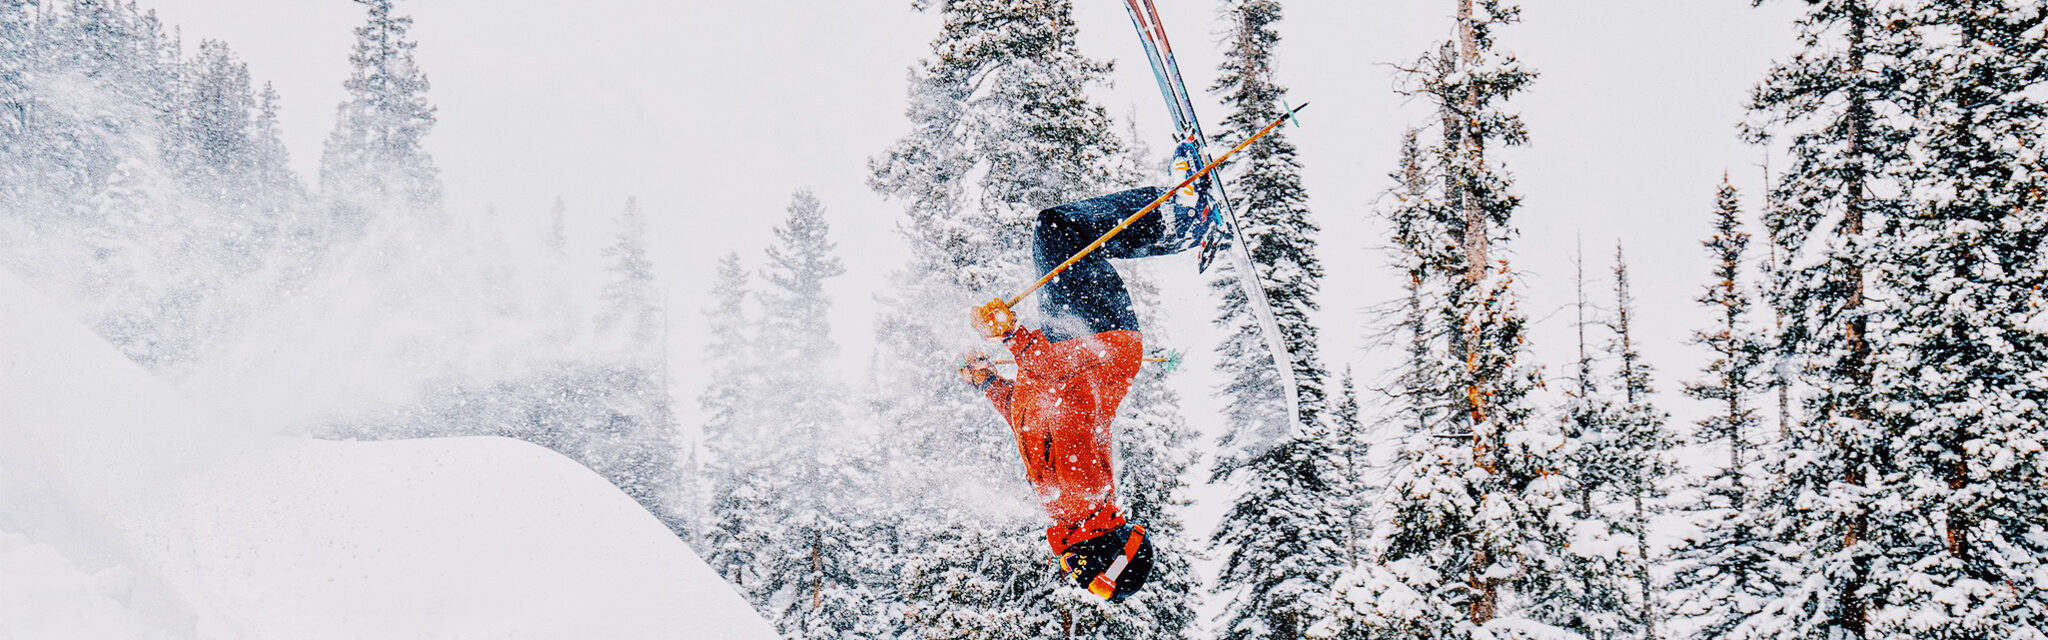 A skier flips upside down off a powdery ledge